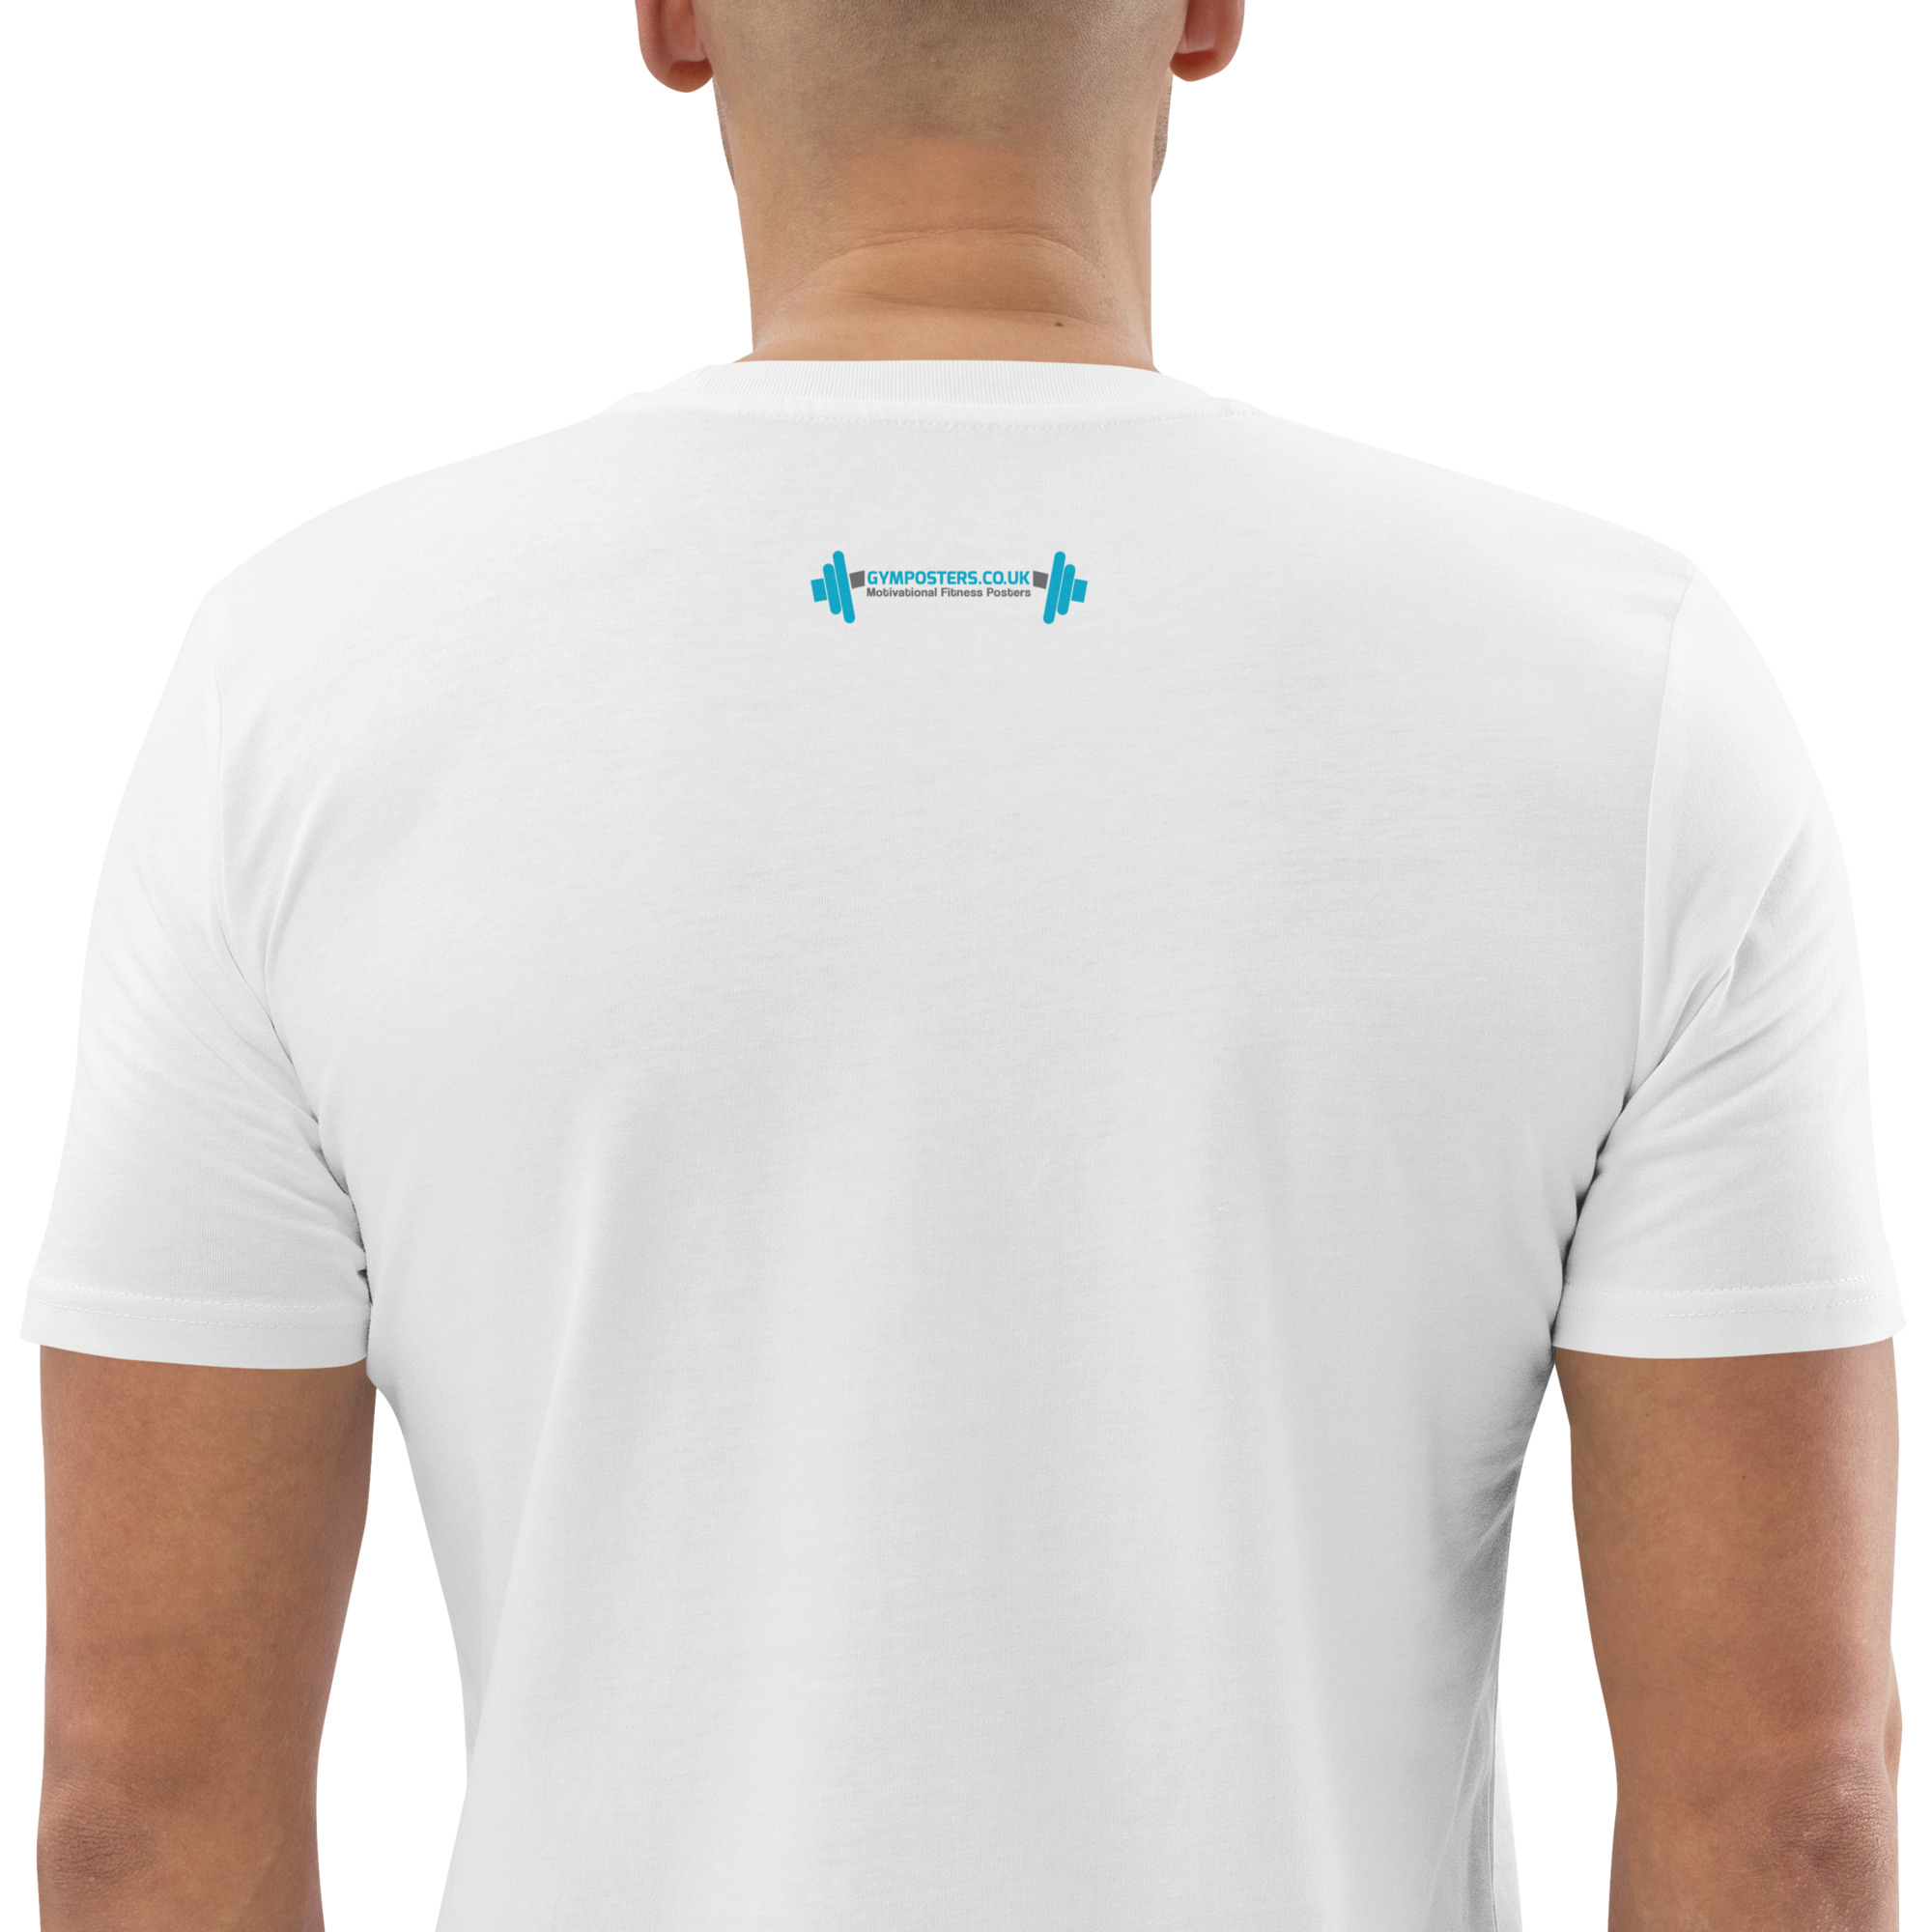 unisex-organic-cotton-t-shirt-white-zoomed-in-2-6578511614798.jpg